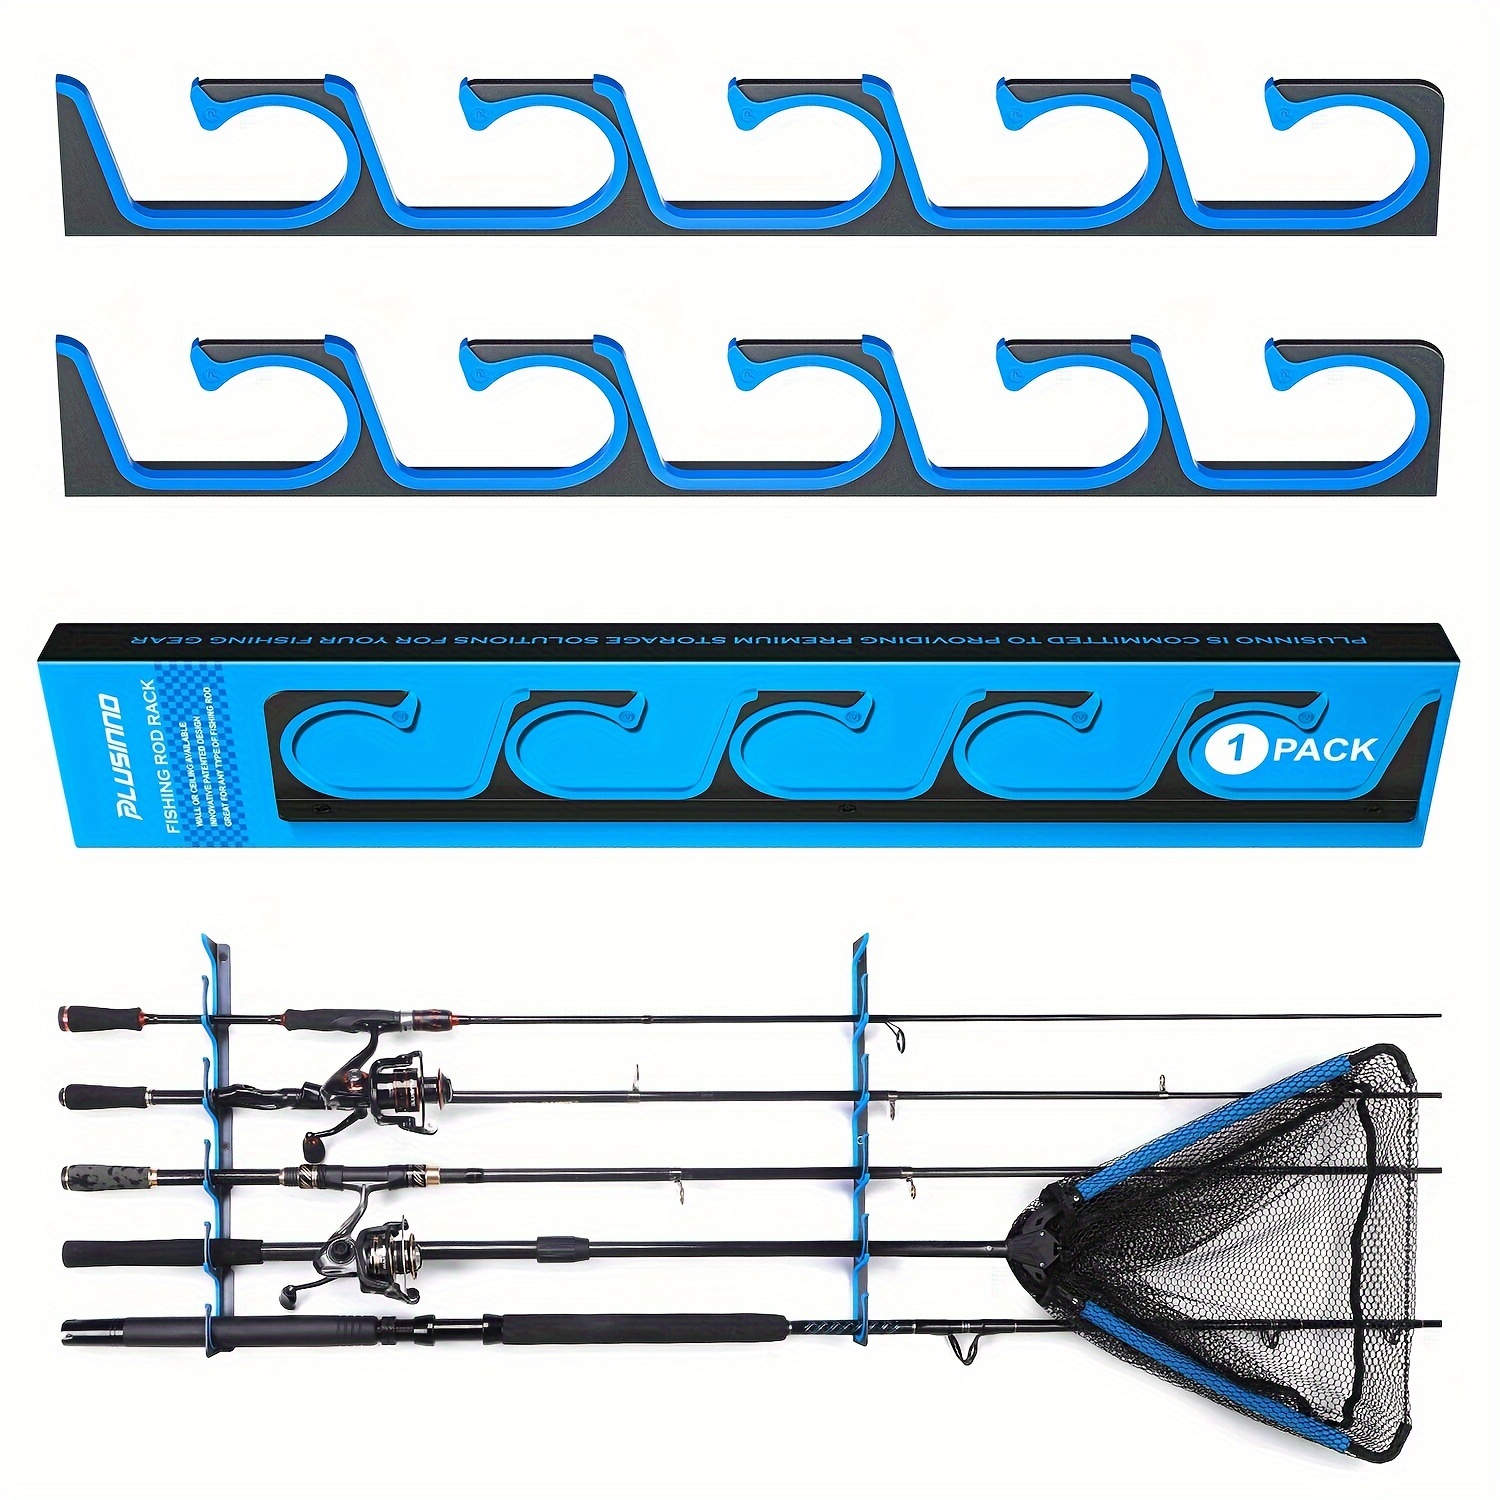 

Plusinno 1 Pack H5 Horizontal Fishing Rod/pole Holder For Garage, Wall/ceiling Mounted Fishing Rod Rack